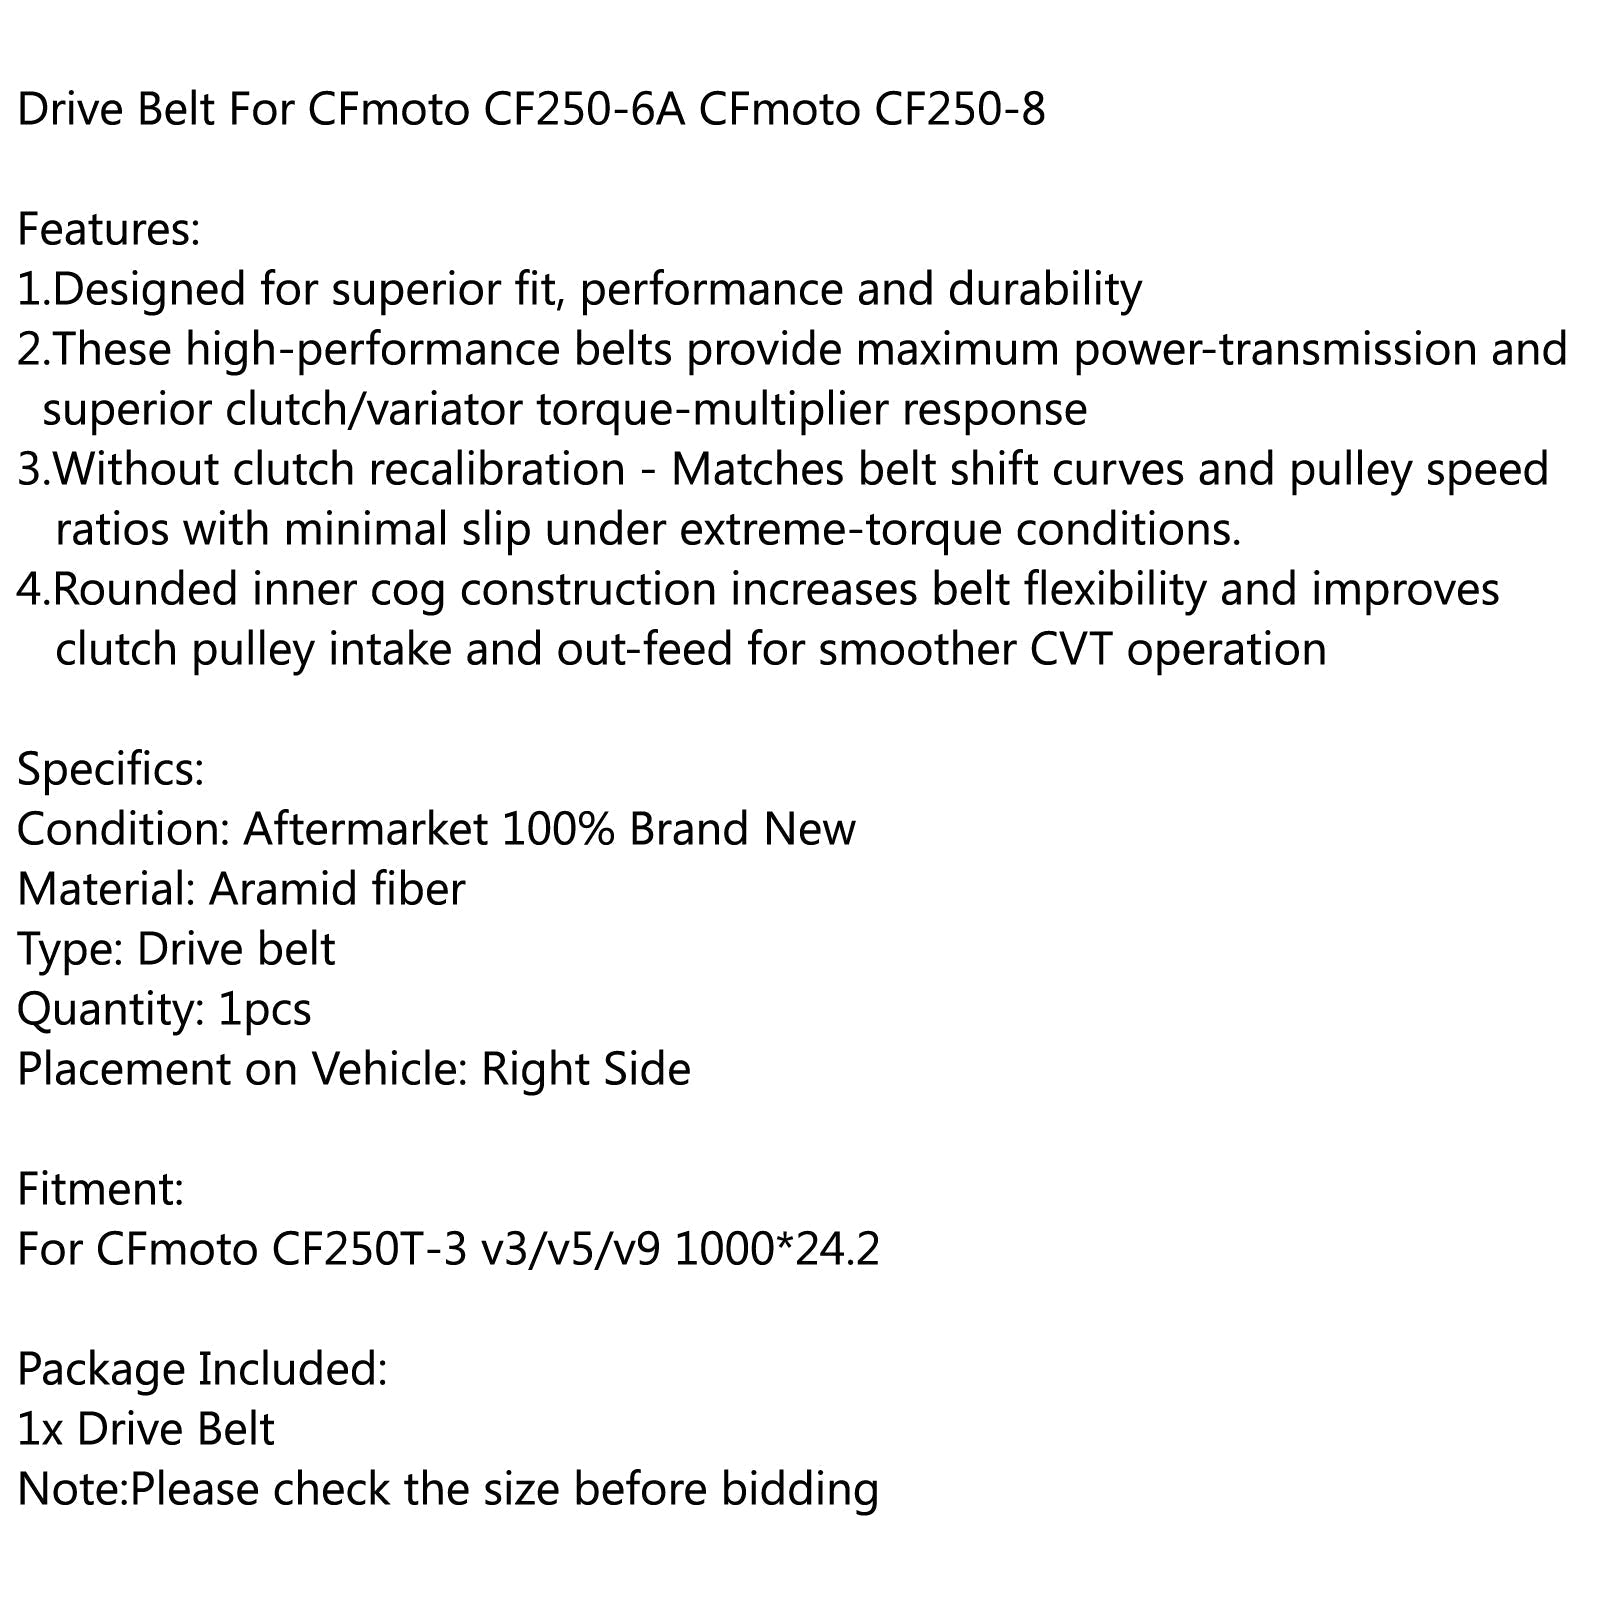 Cinghia di trasmissione per CFmoto CF250T-3 v3/v5/v9 Generico 1000*24.2